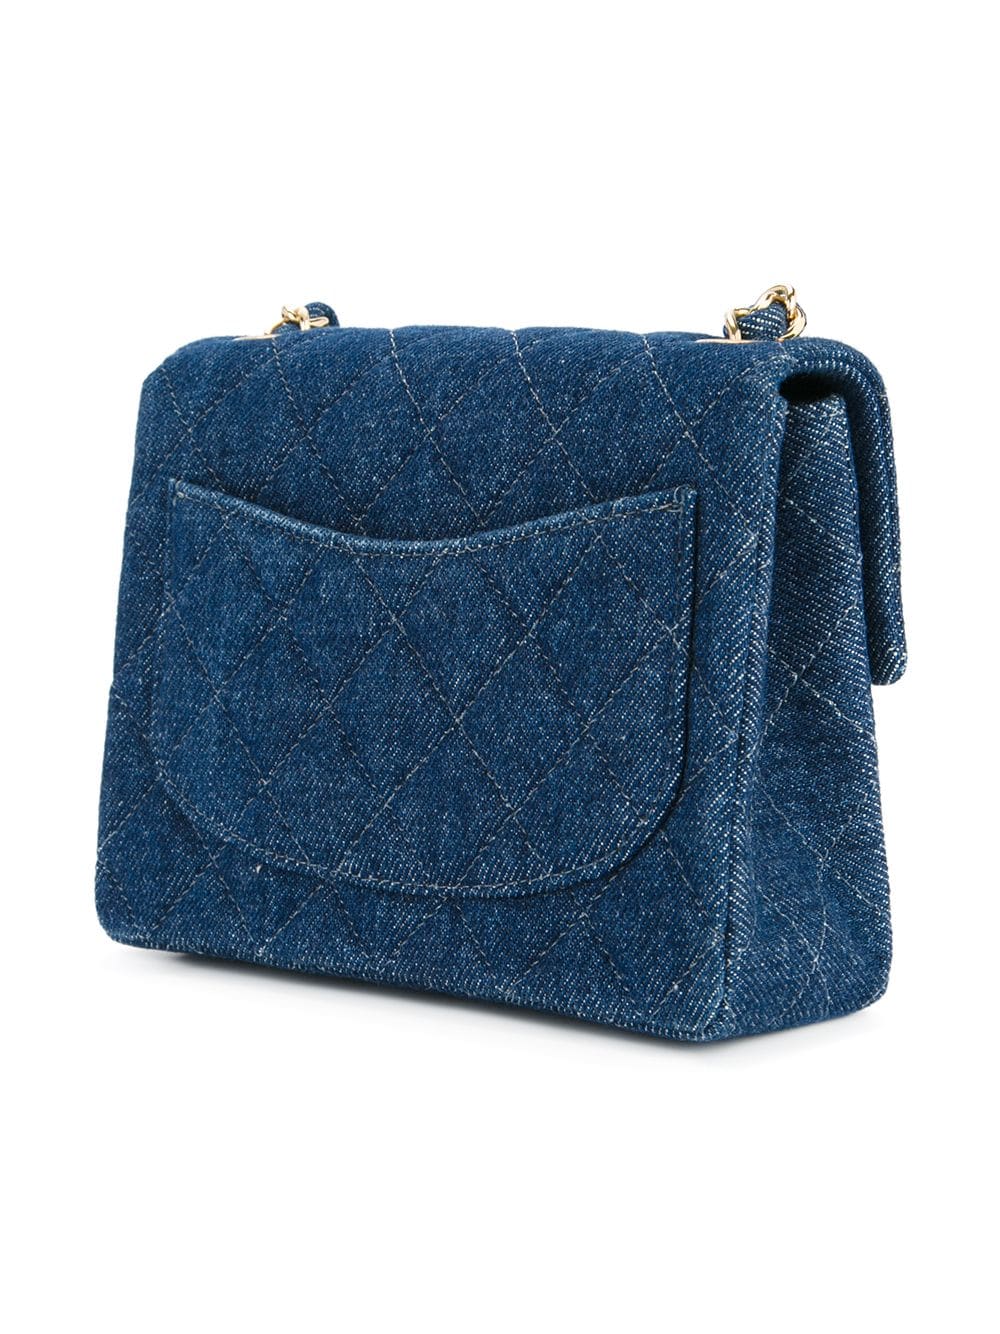 Chanel Brown Denim - Jeans Handbag (Pre-Owned)